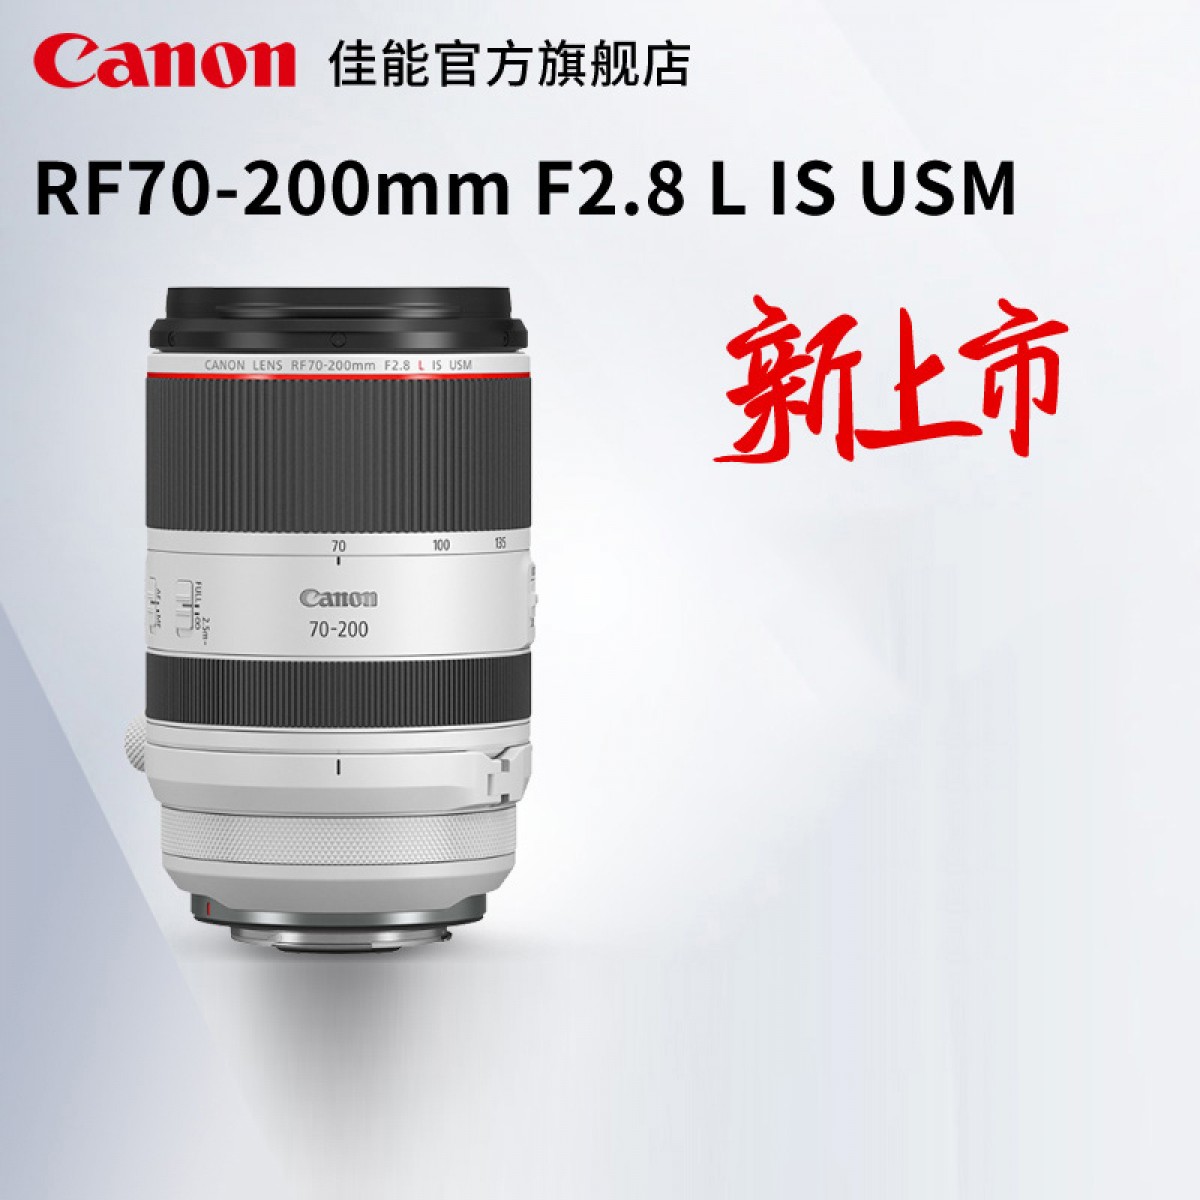 Canon/佳能 RF70-200mm F2.8 L IS USM